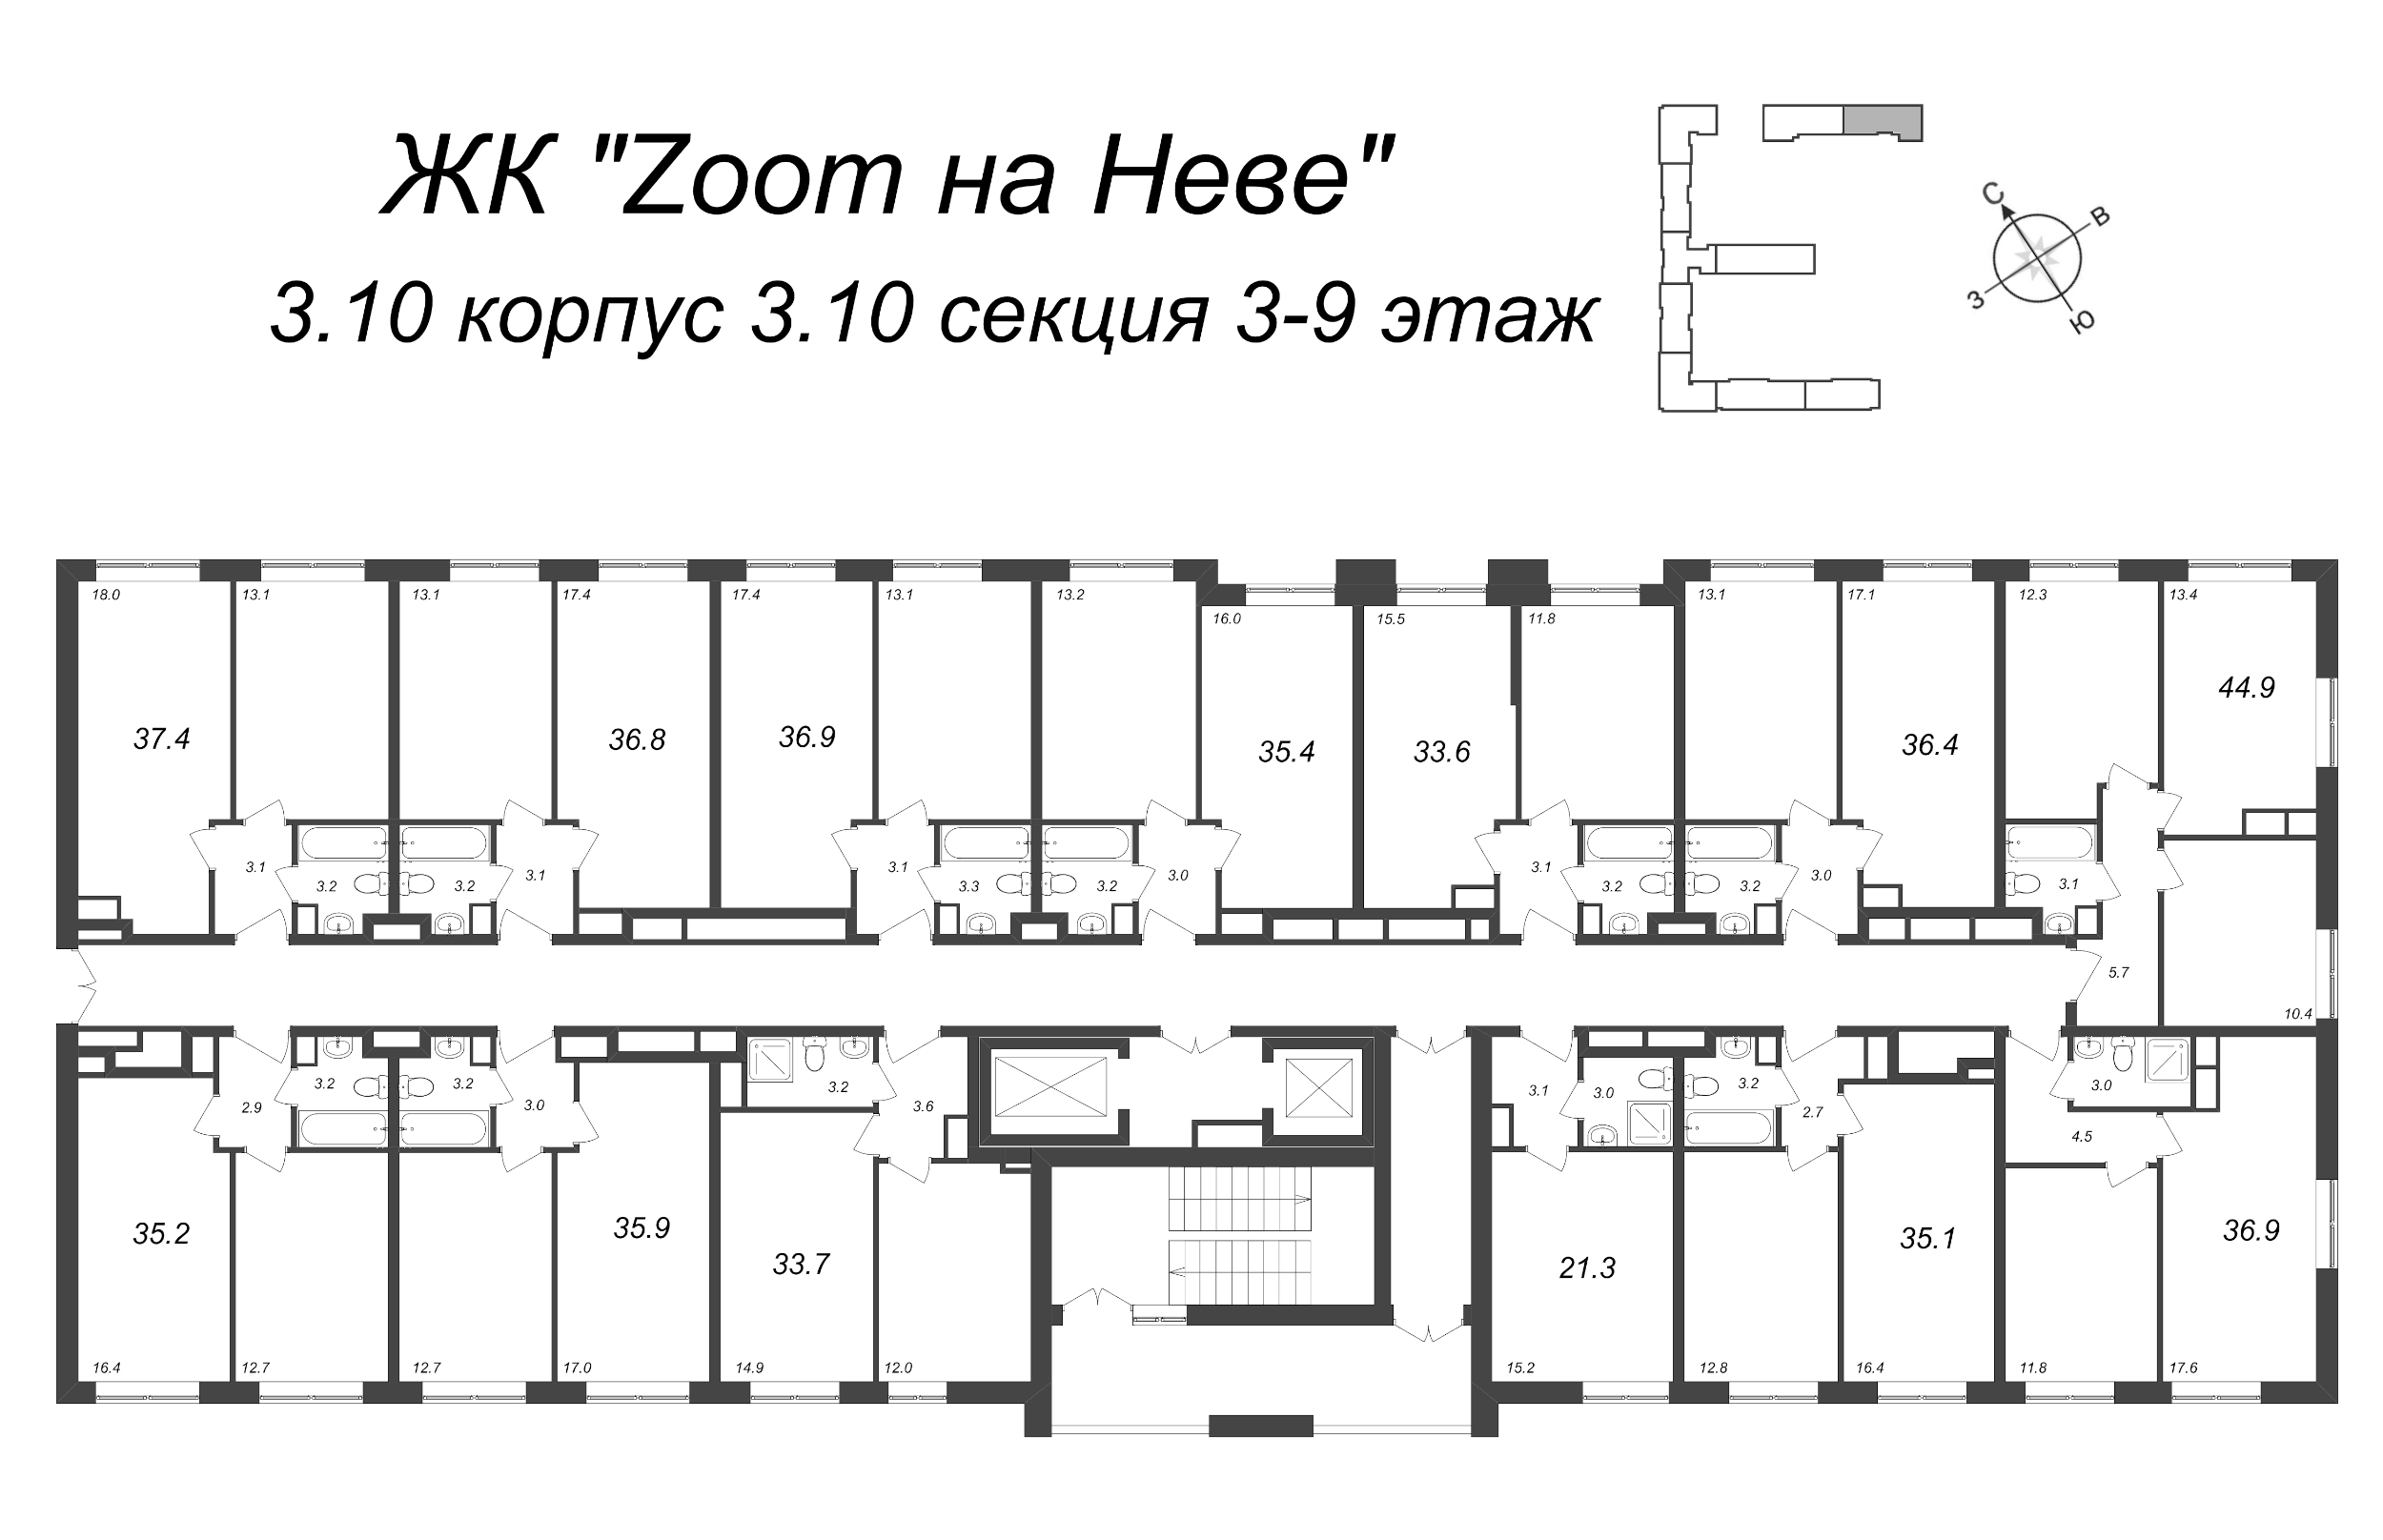 2-комнатная (Евро) квартира, 35.59 м² - планировка этажа